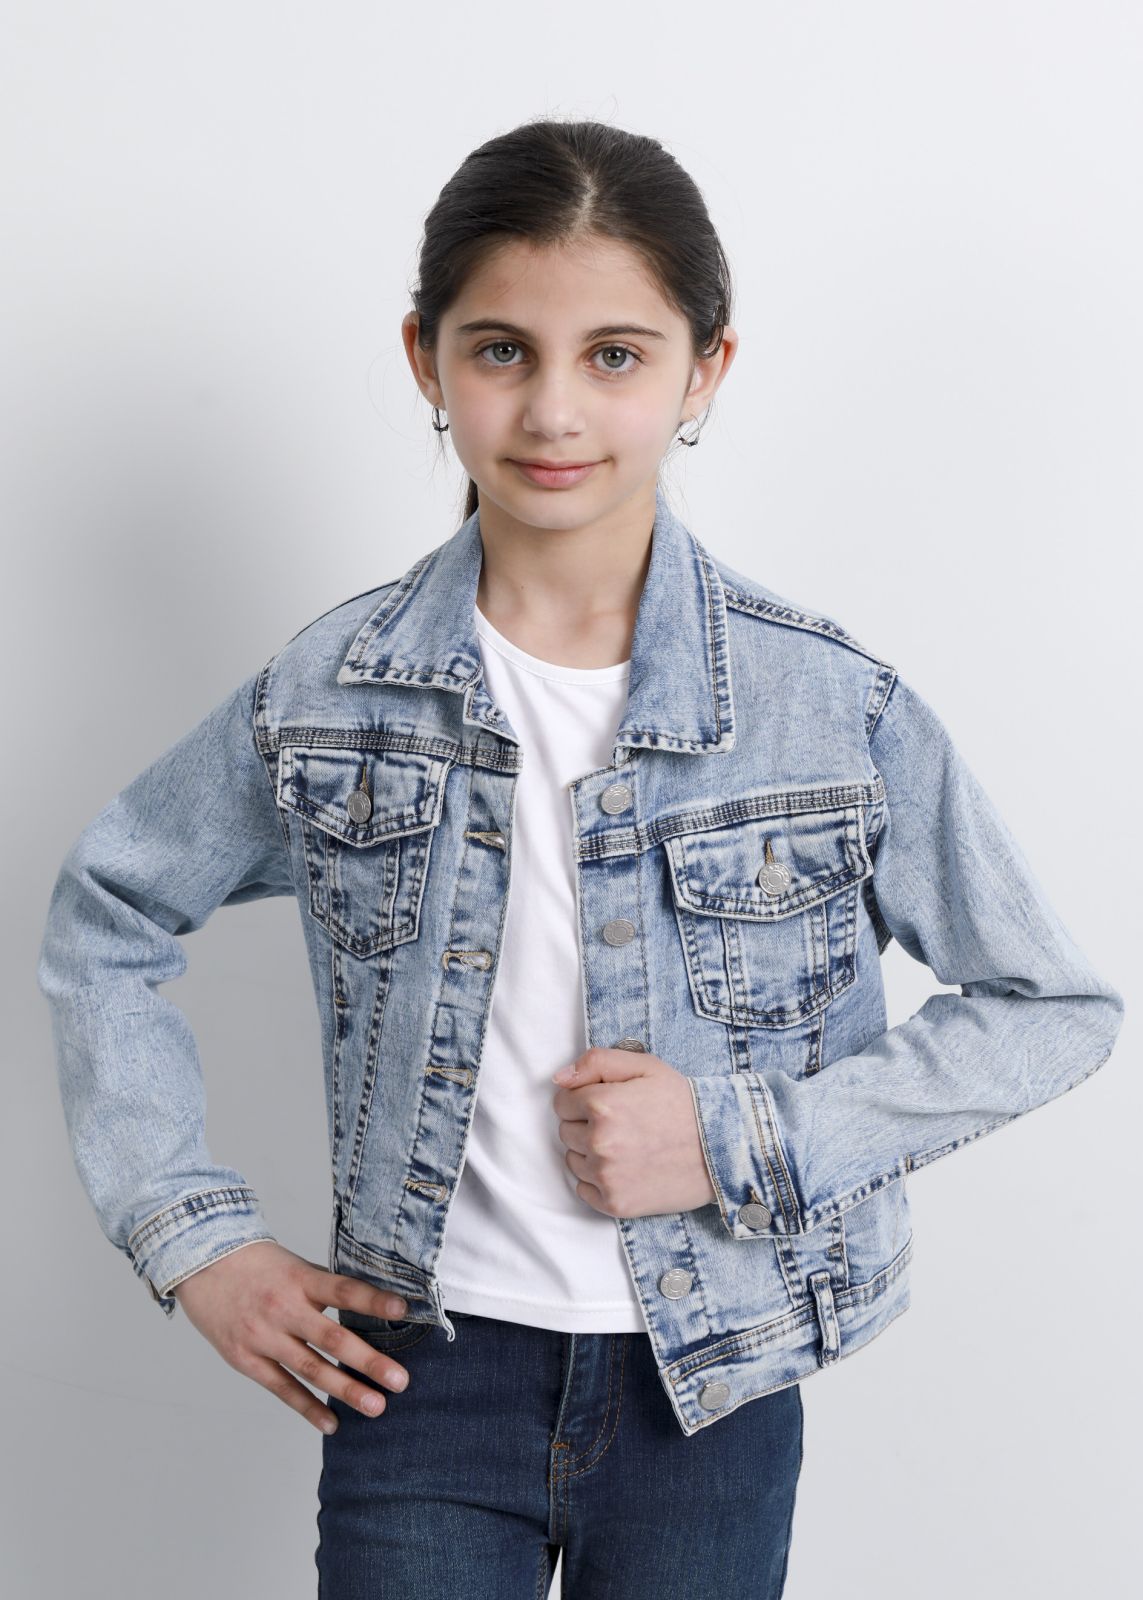 Toddler Baby Boys Girls Denim Jacket Kids Button Jeans Jacket Top Coat  Outerwear (Blue, 2-3T) : Amazon.in: Fashion